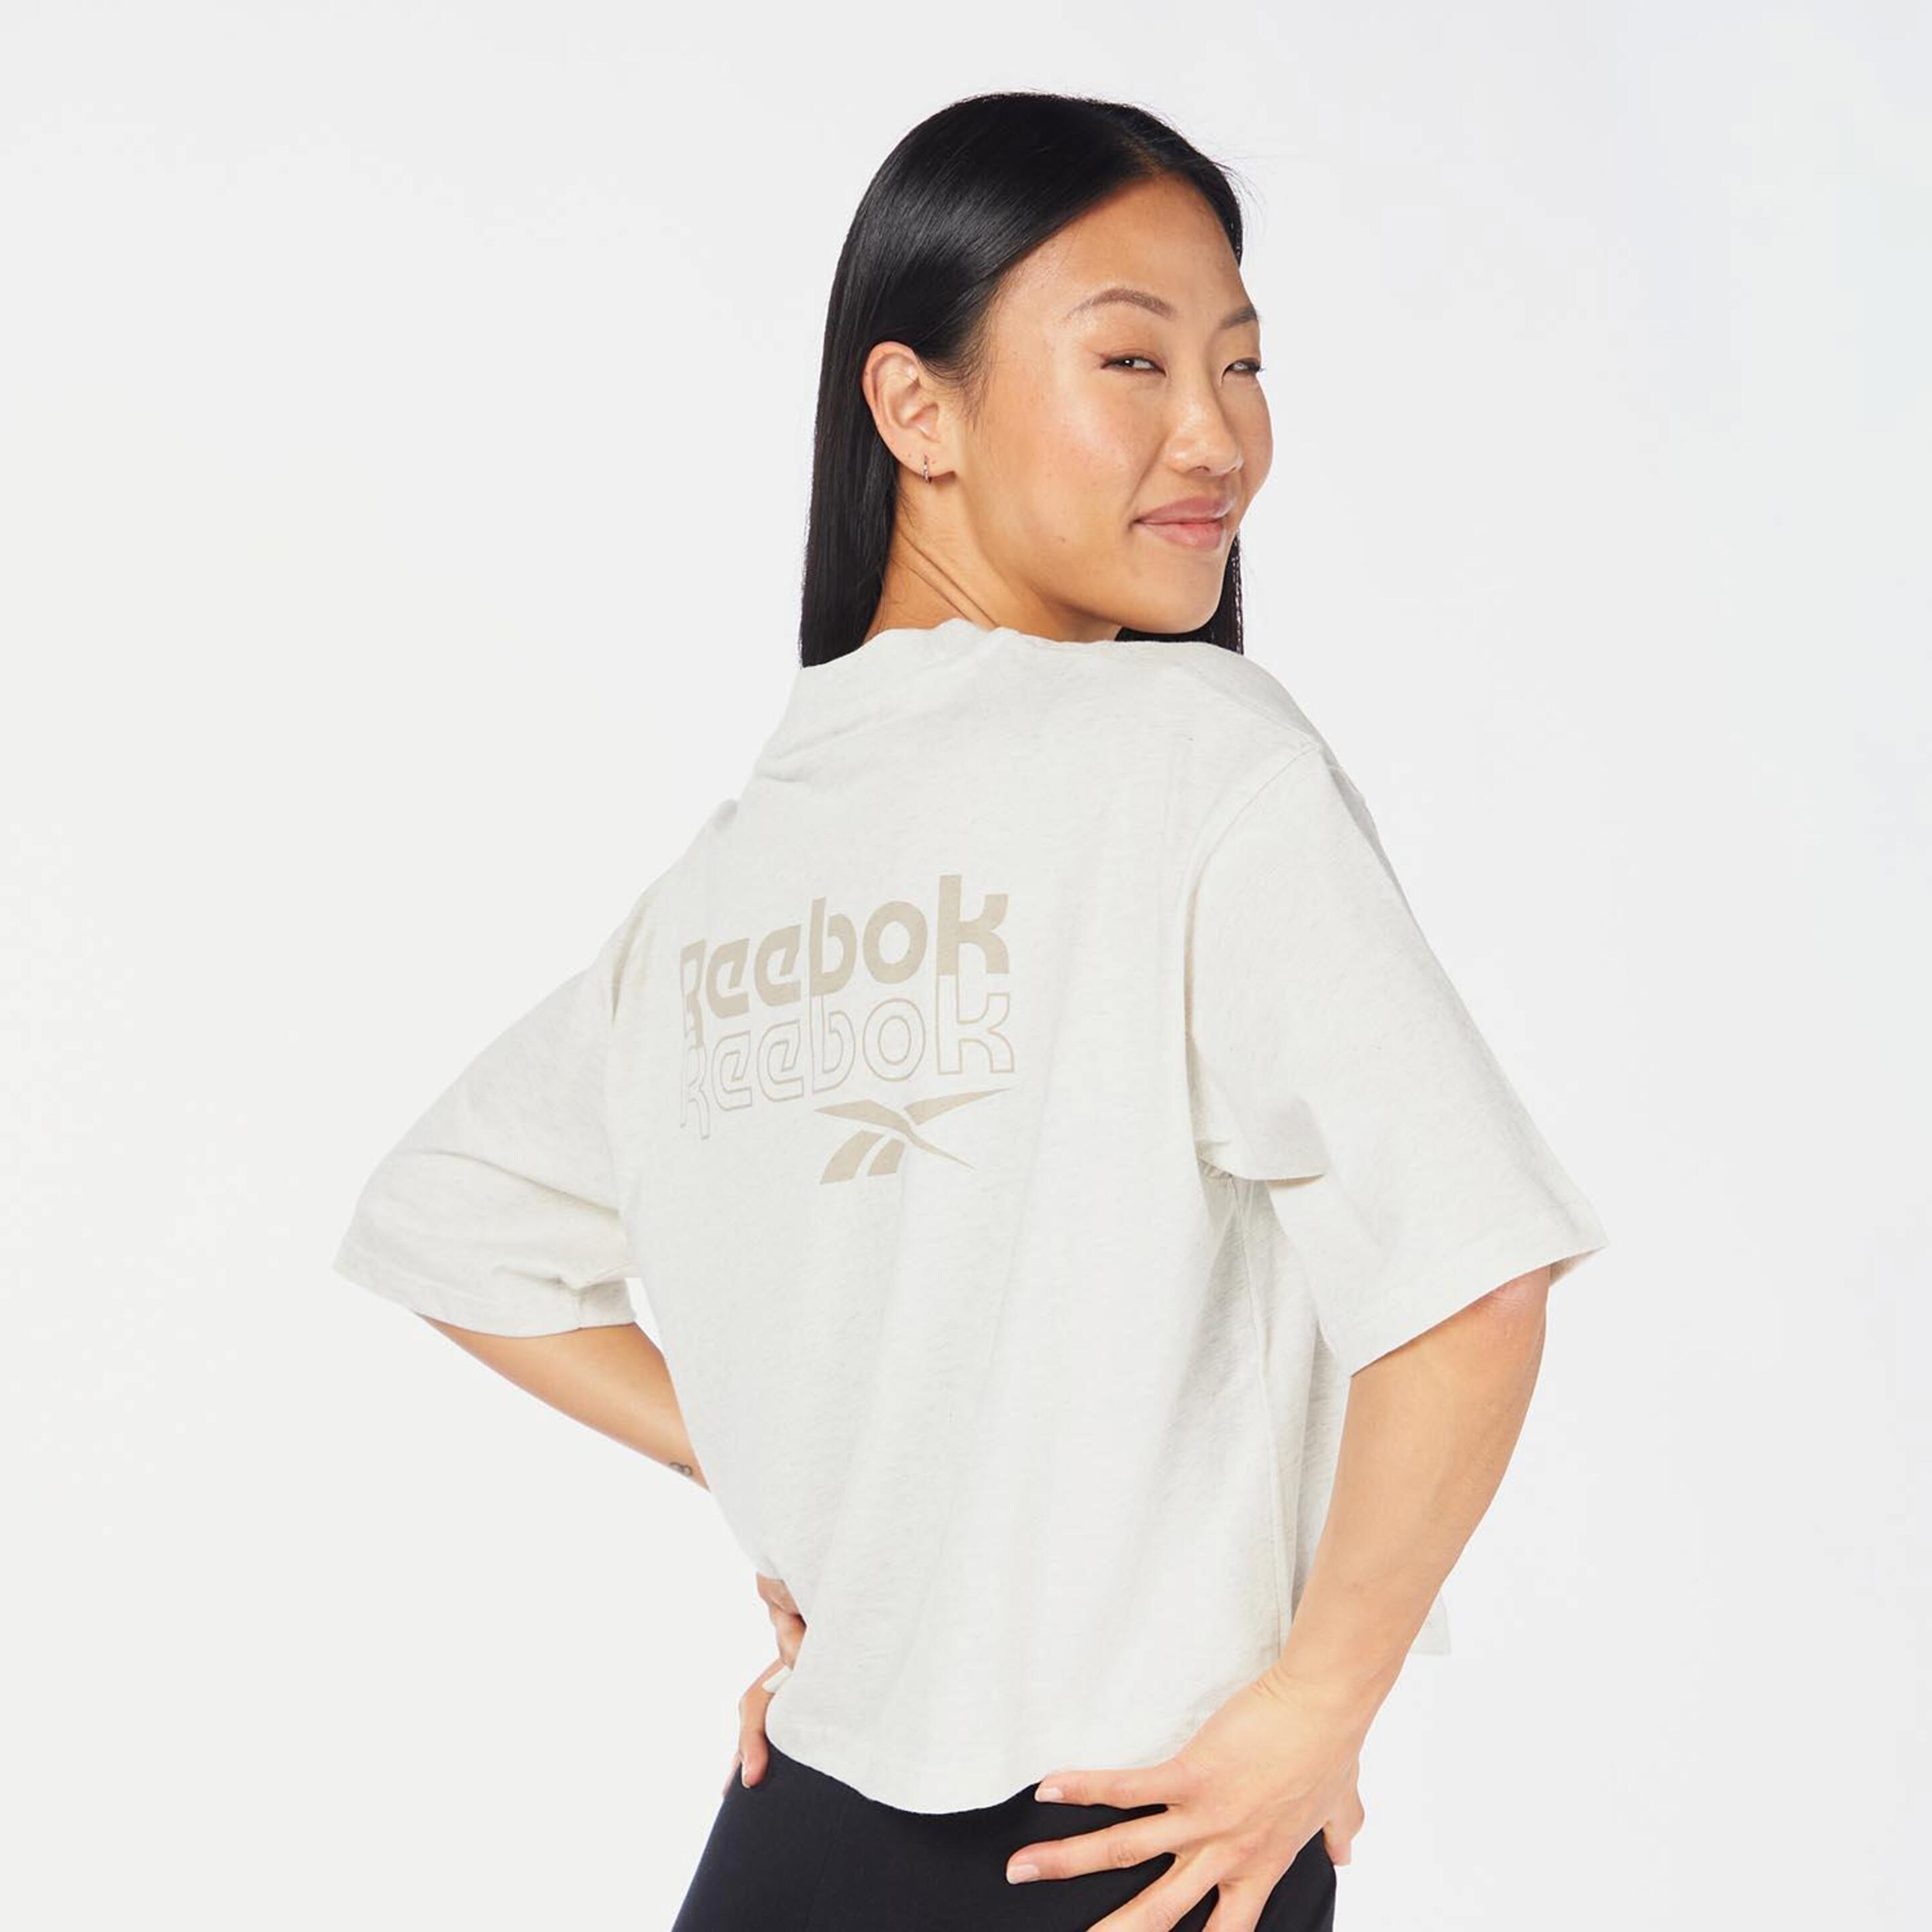 Reebok Rie - Arena - Camiseta Mujer